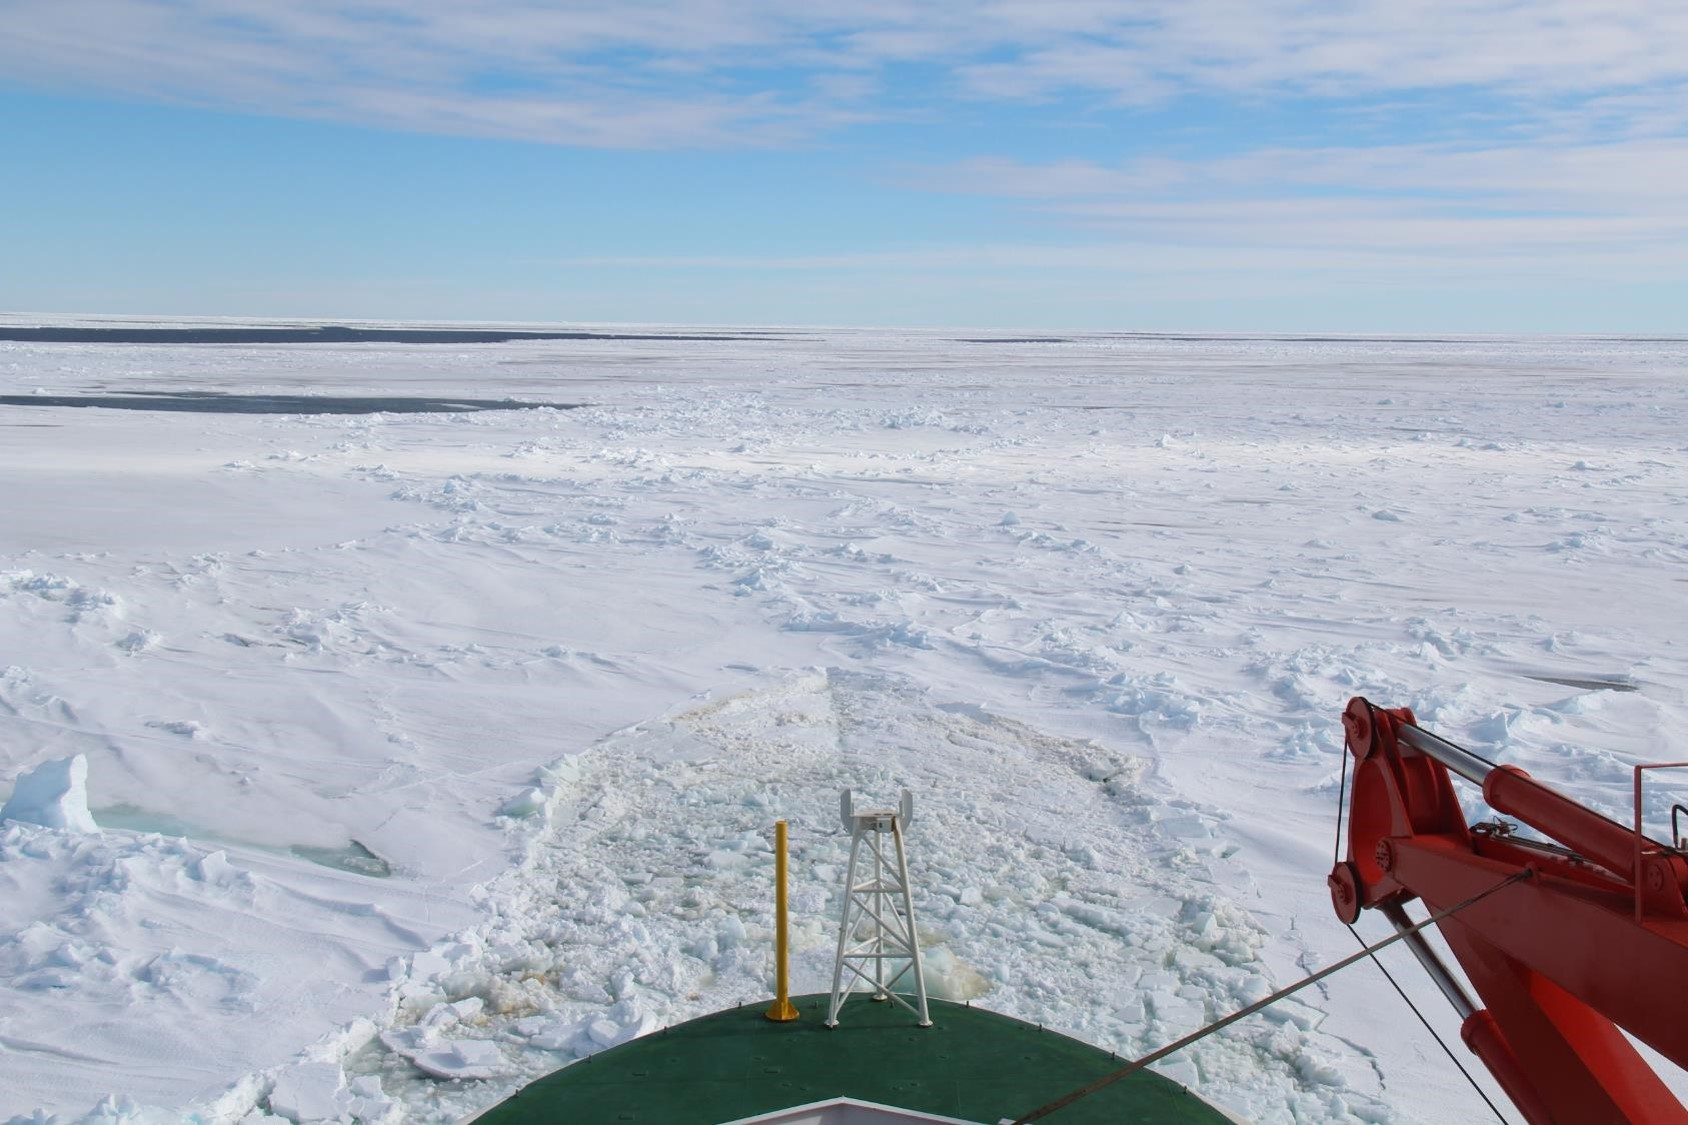 The Polarstern surrounded by sea ice. Photo: Sharyn Ossebaar.